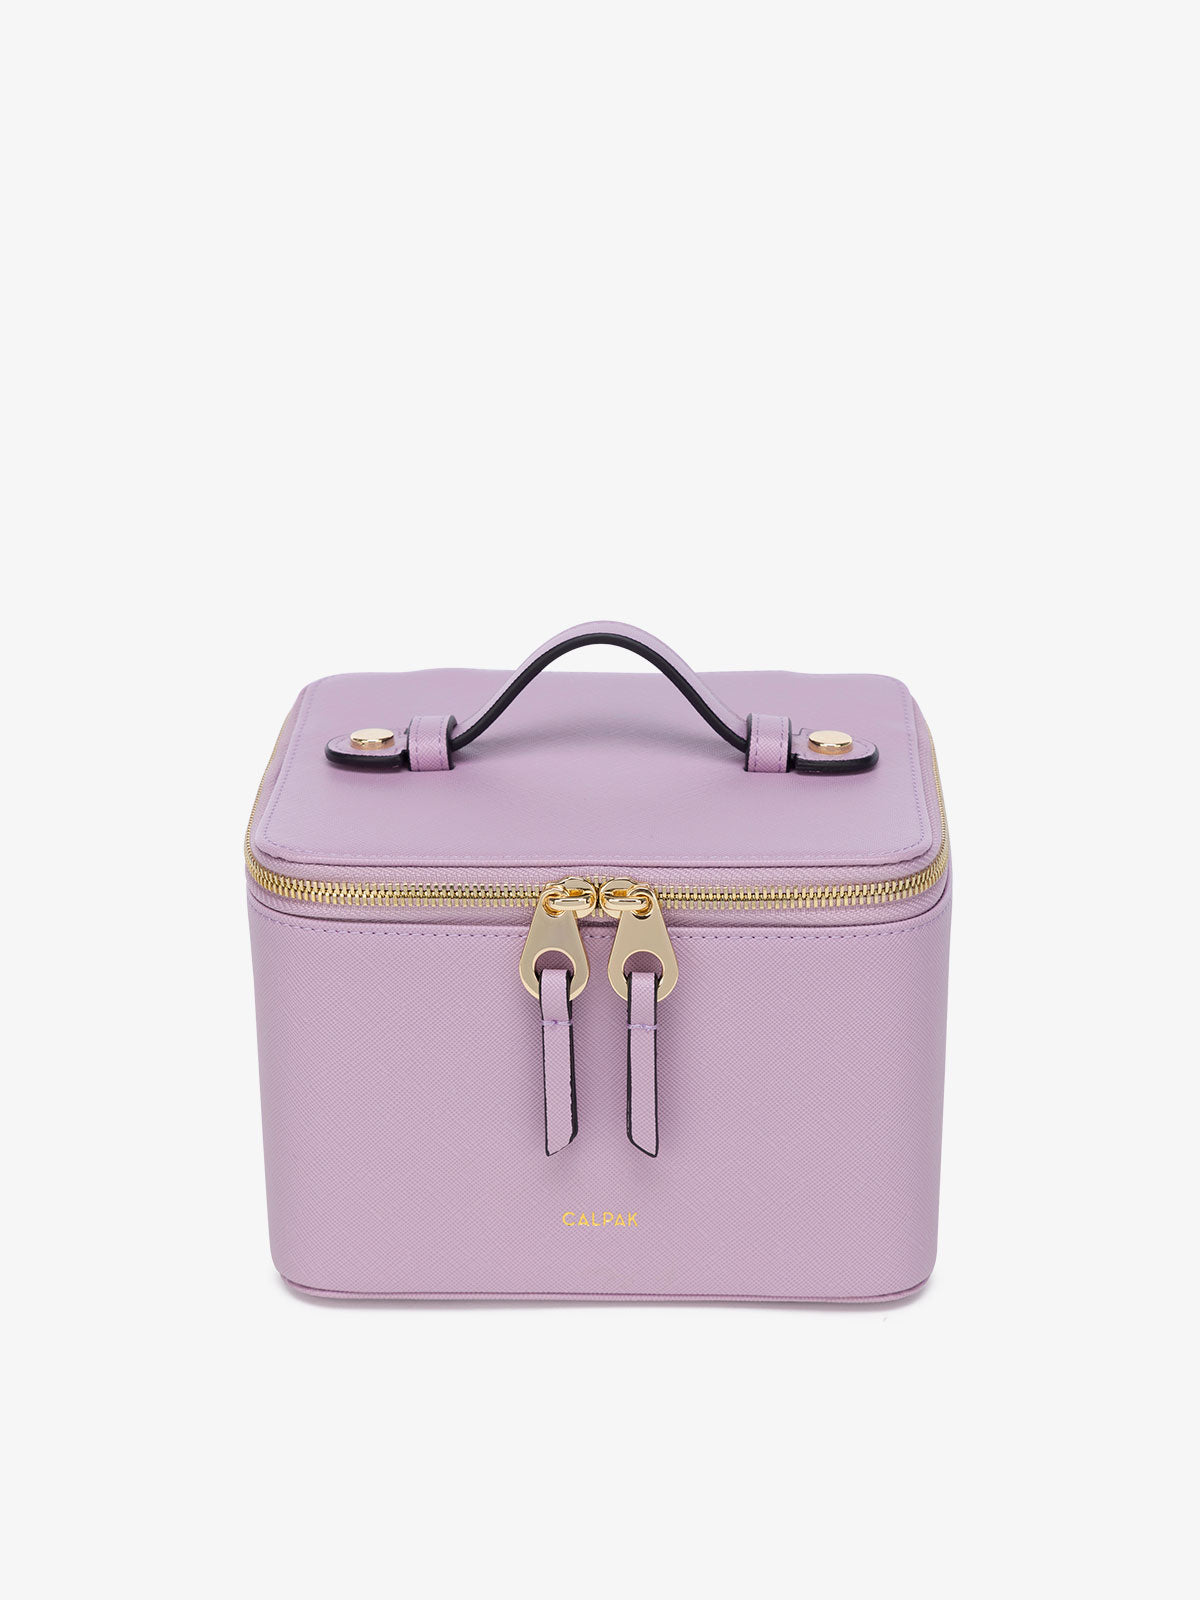 CALPAK sunglasses case in lavender purple